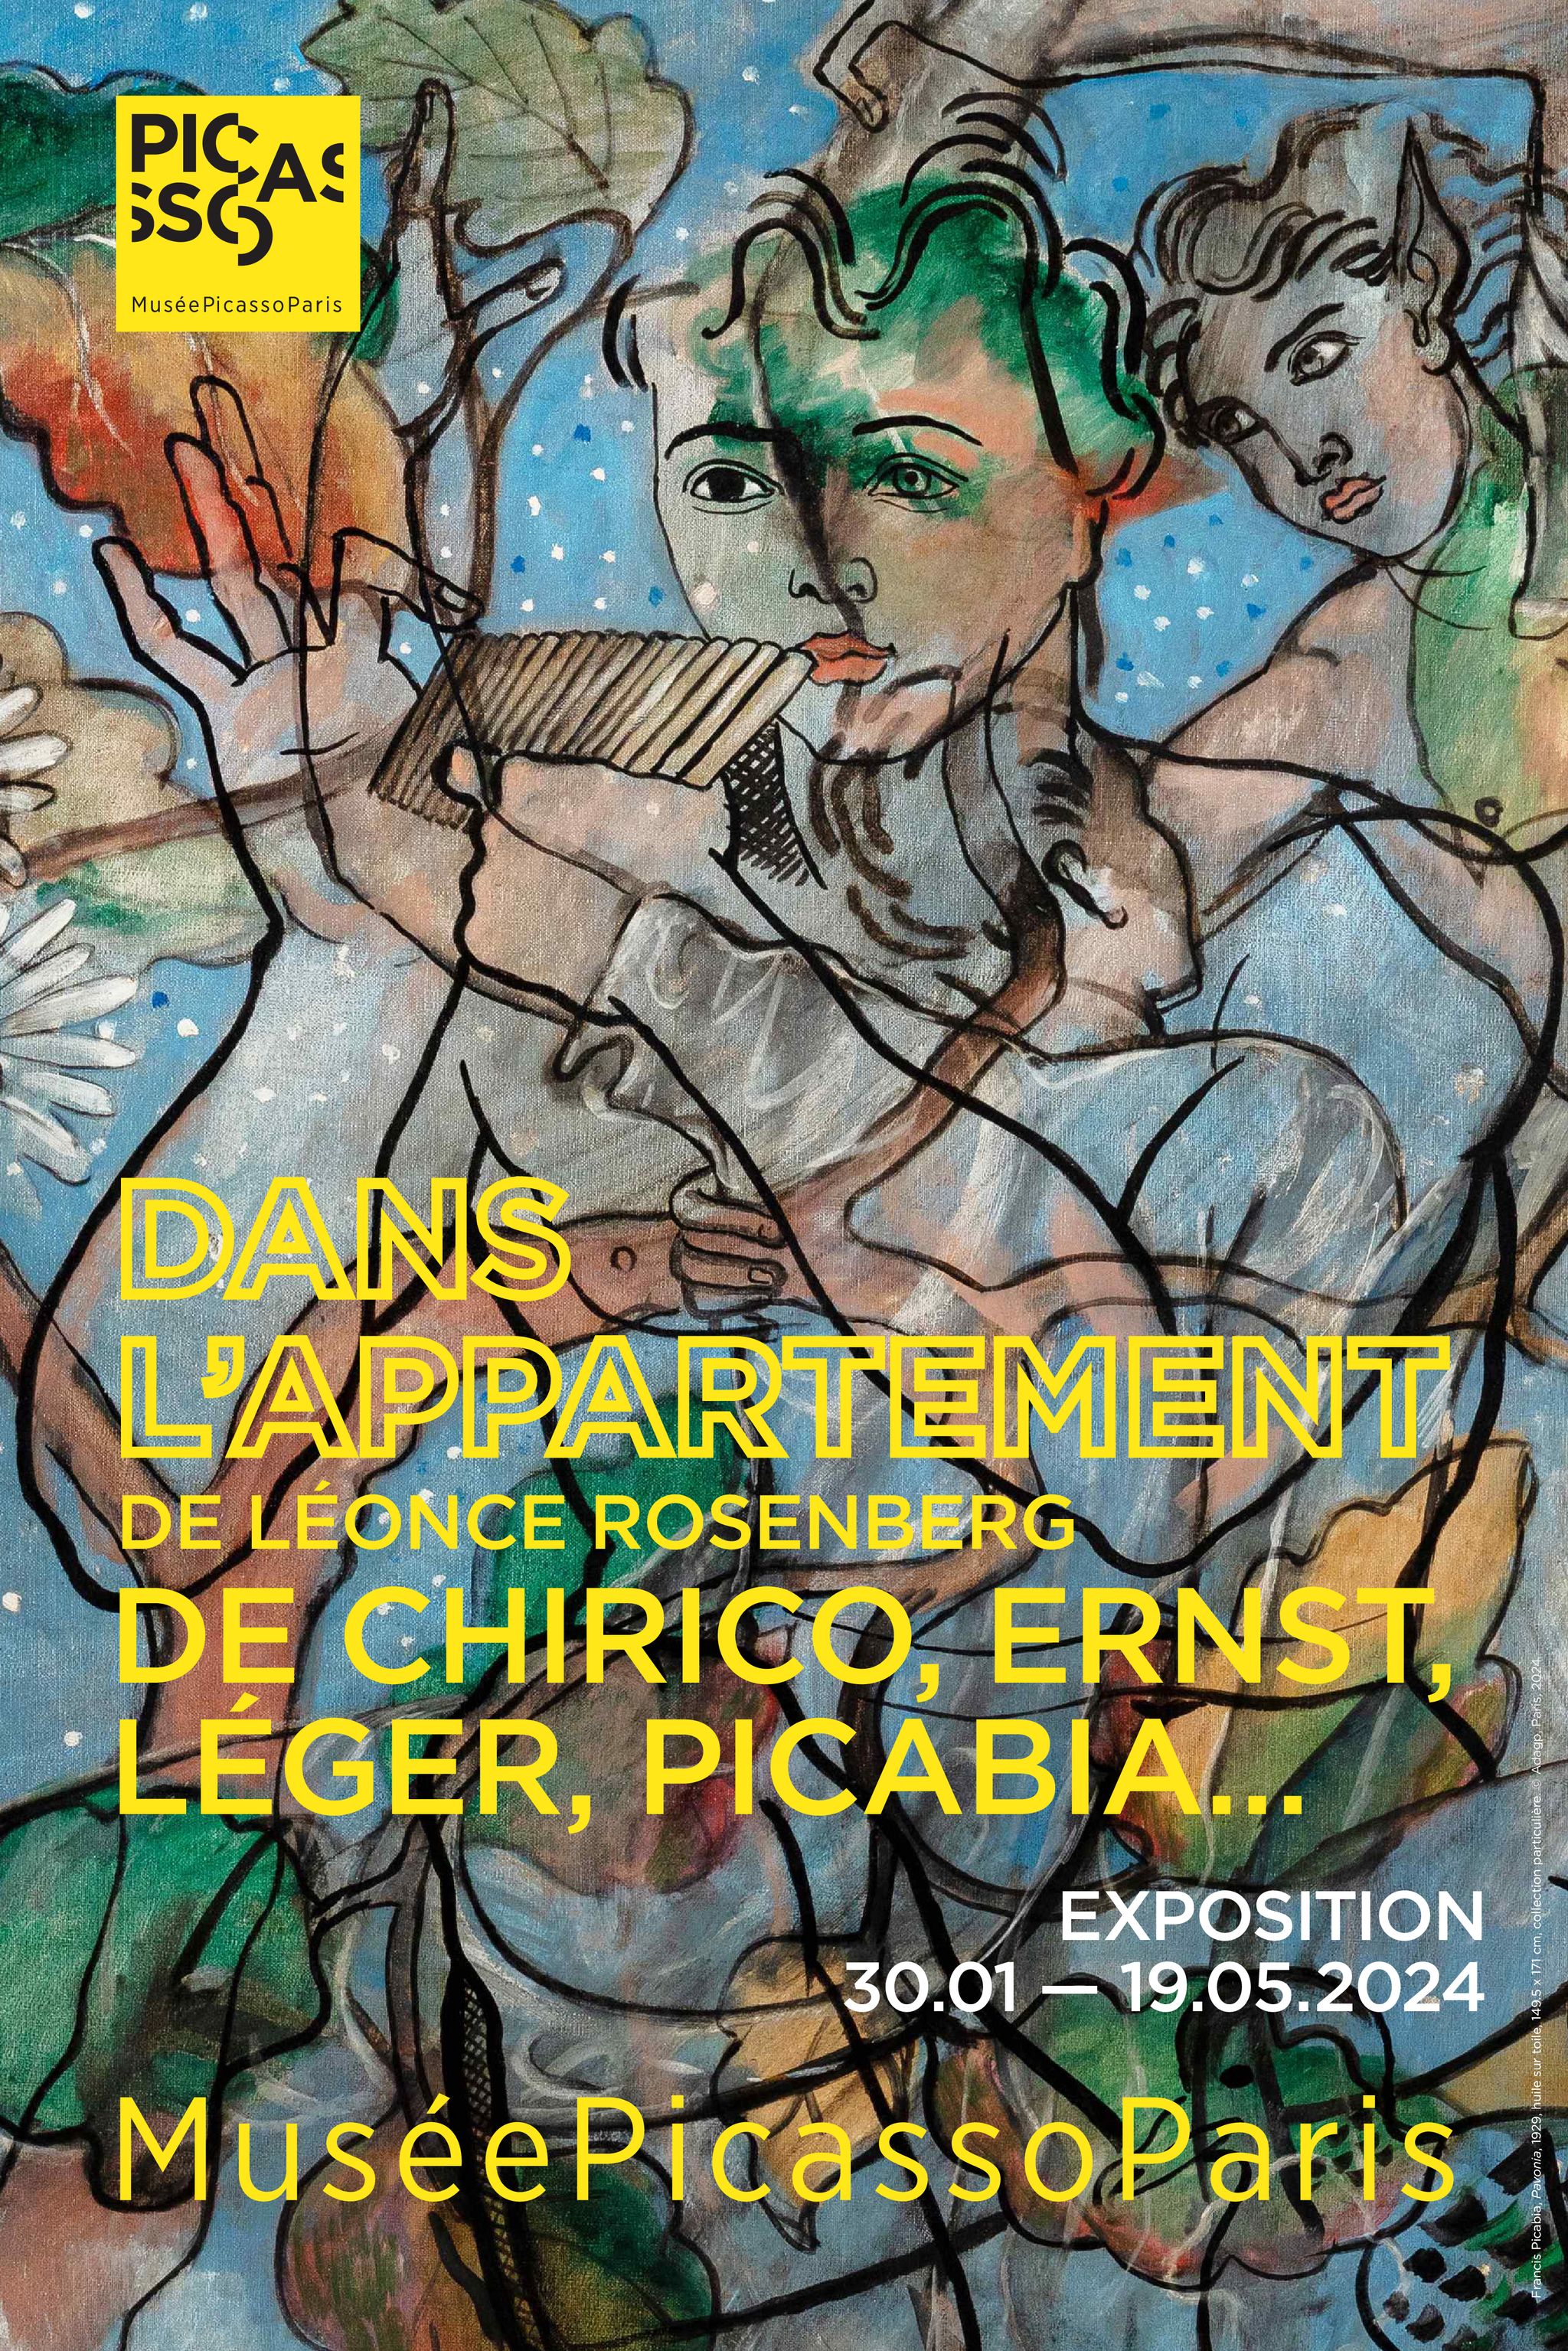 In Léonce Rosenberg's apartment. De Chirico, Ernst, Léger, Picabia...